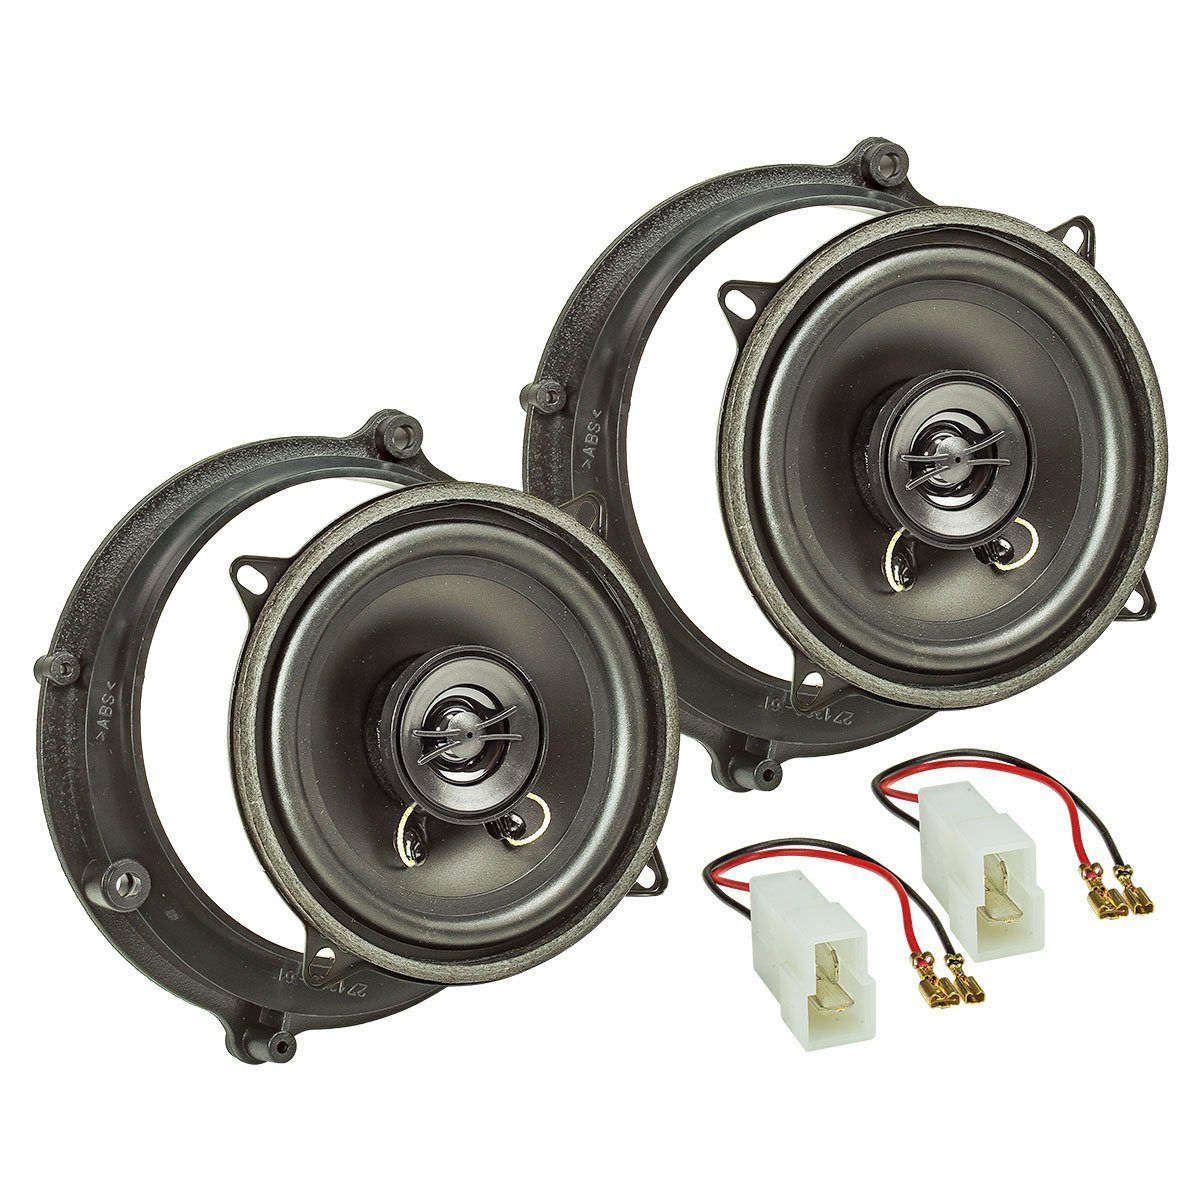 tomzz Audio TA13.0-Pro Lautsprecherset passt für Audi A4 B5 A4 B5 Avant Tür vorne Auto-Lautsprecher